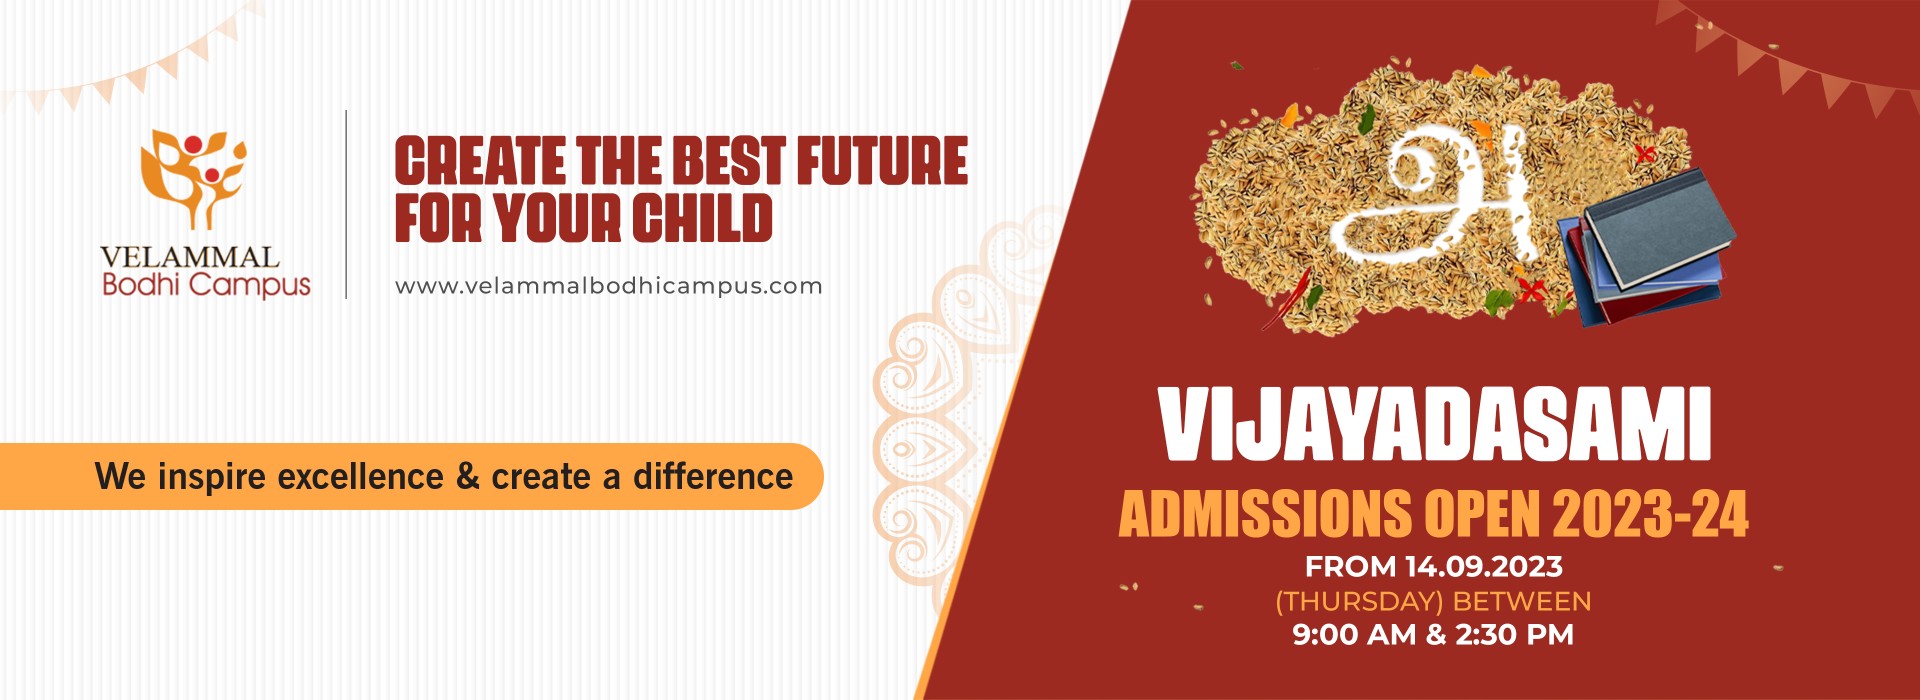 Vijayadasami Admissions Open 2023 -2024